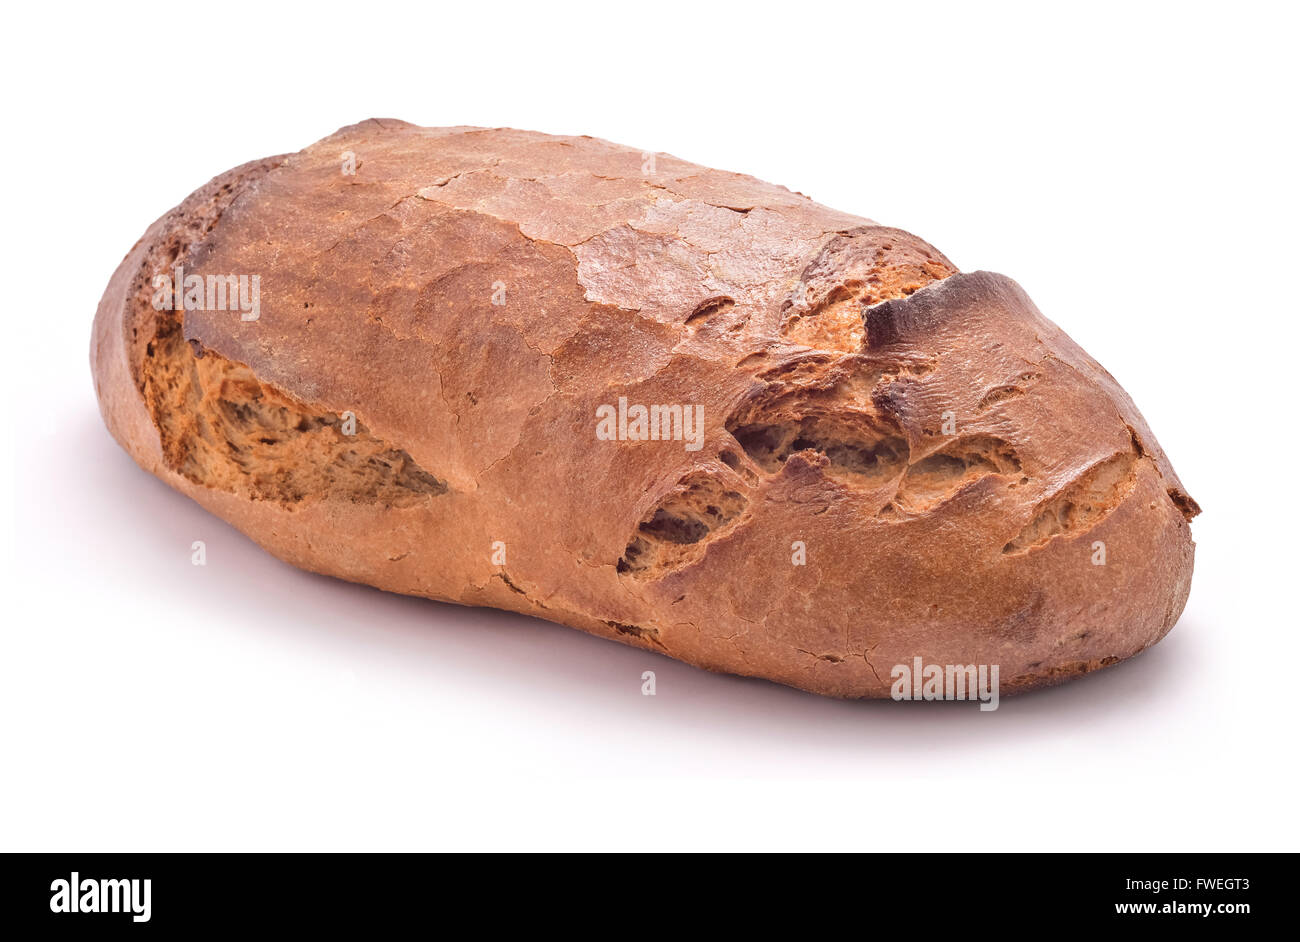 Pane fresco su bianco Foto Stock